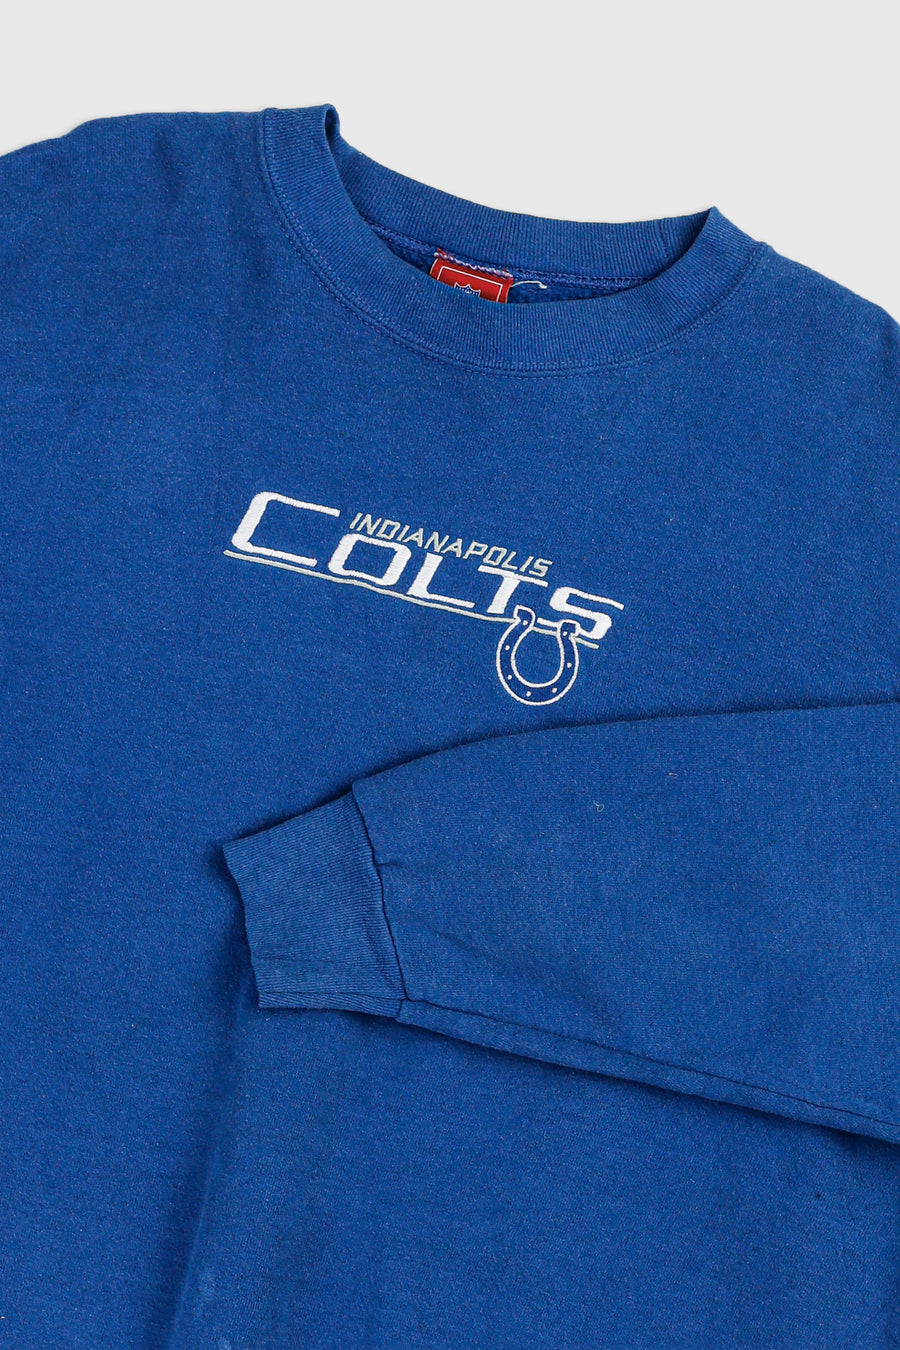 Vintage Indianapolis Colts Sweatshirt - XL